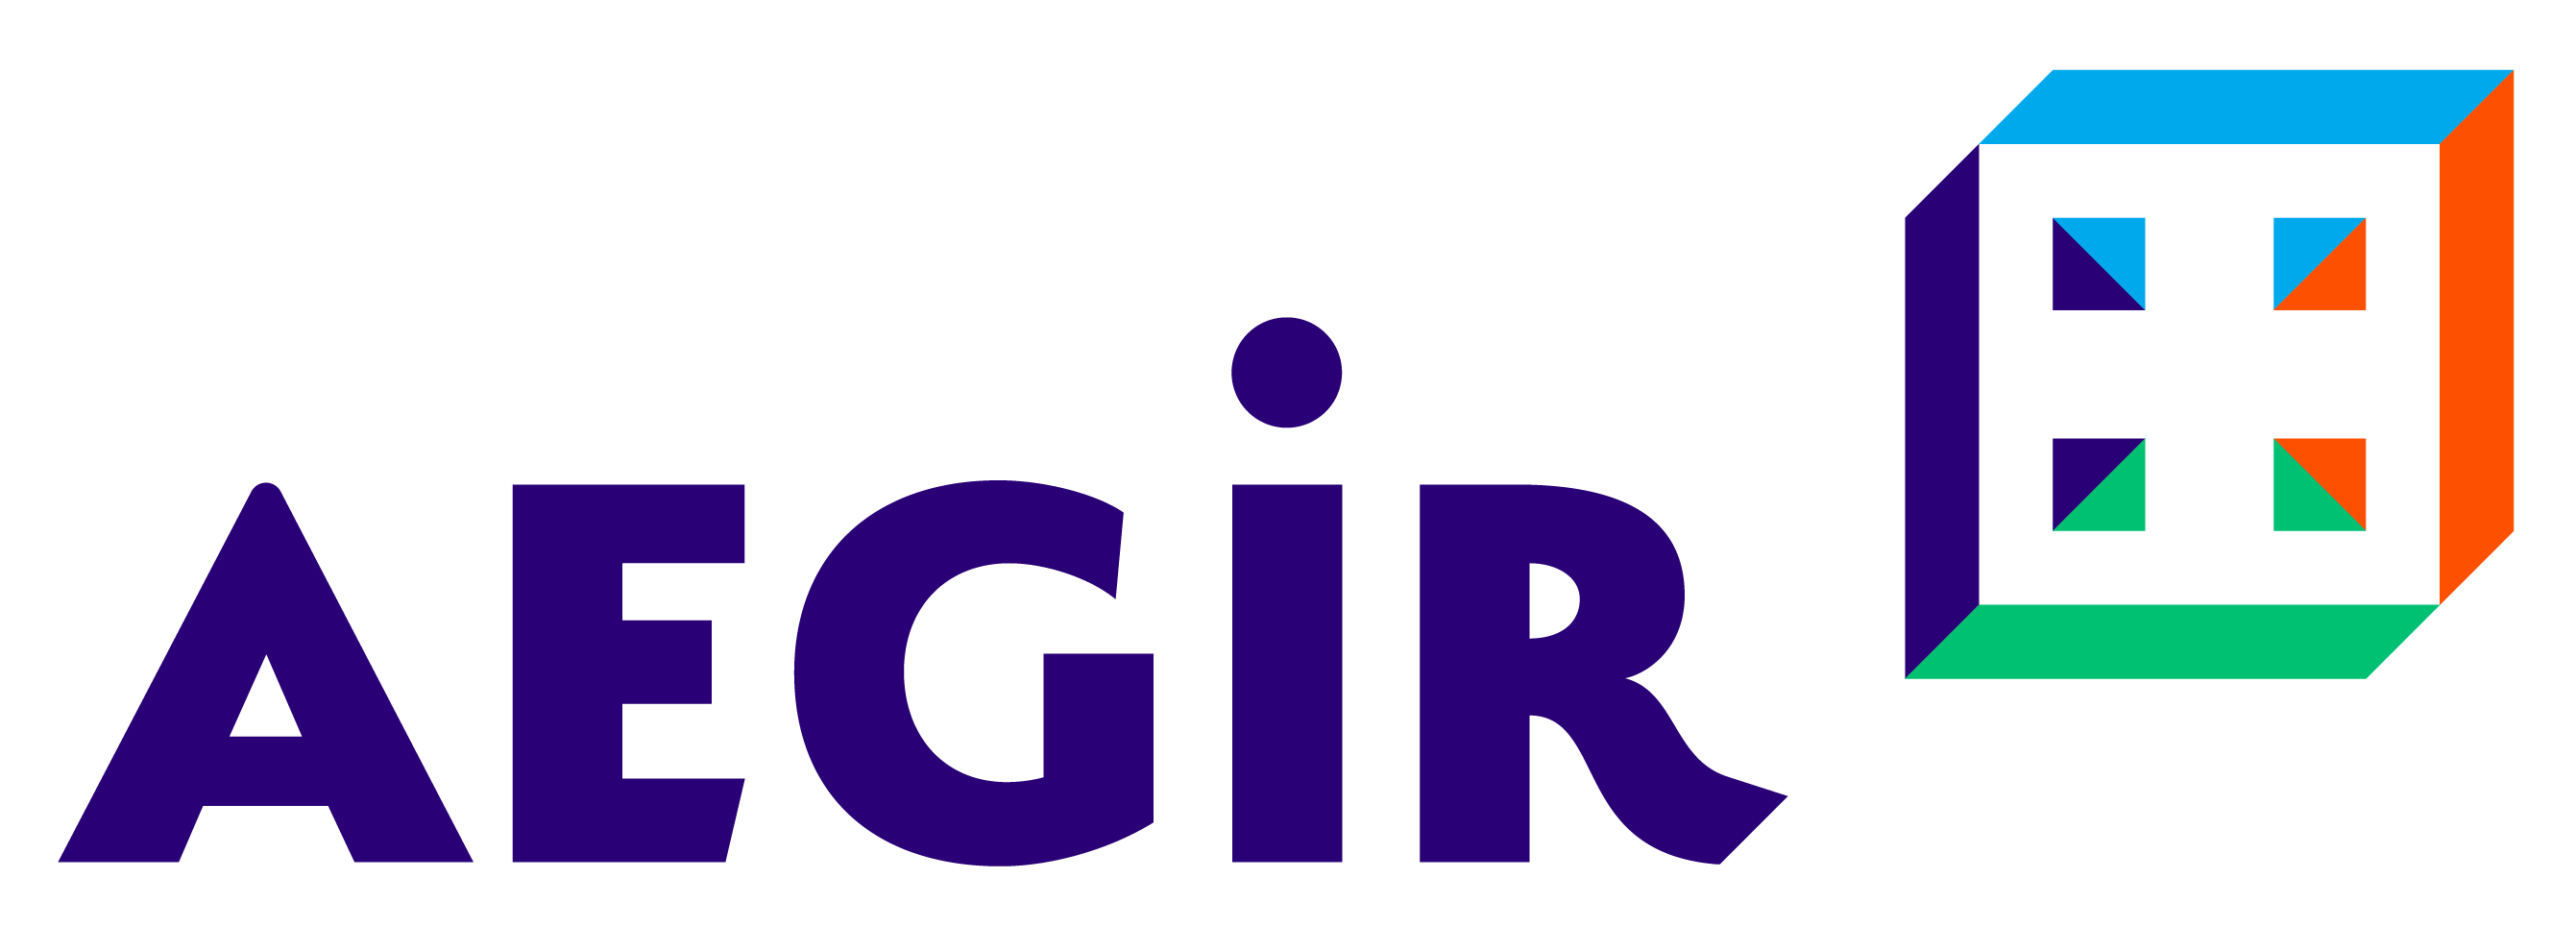 AEGIR_Logo